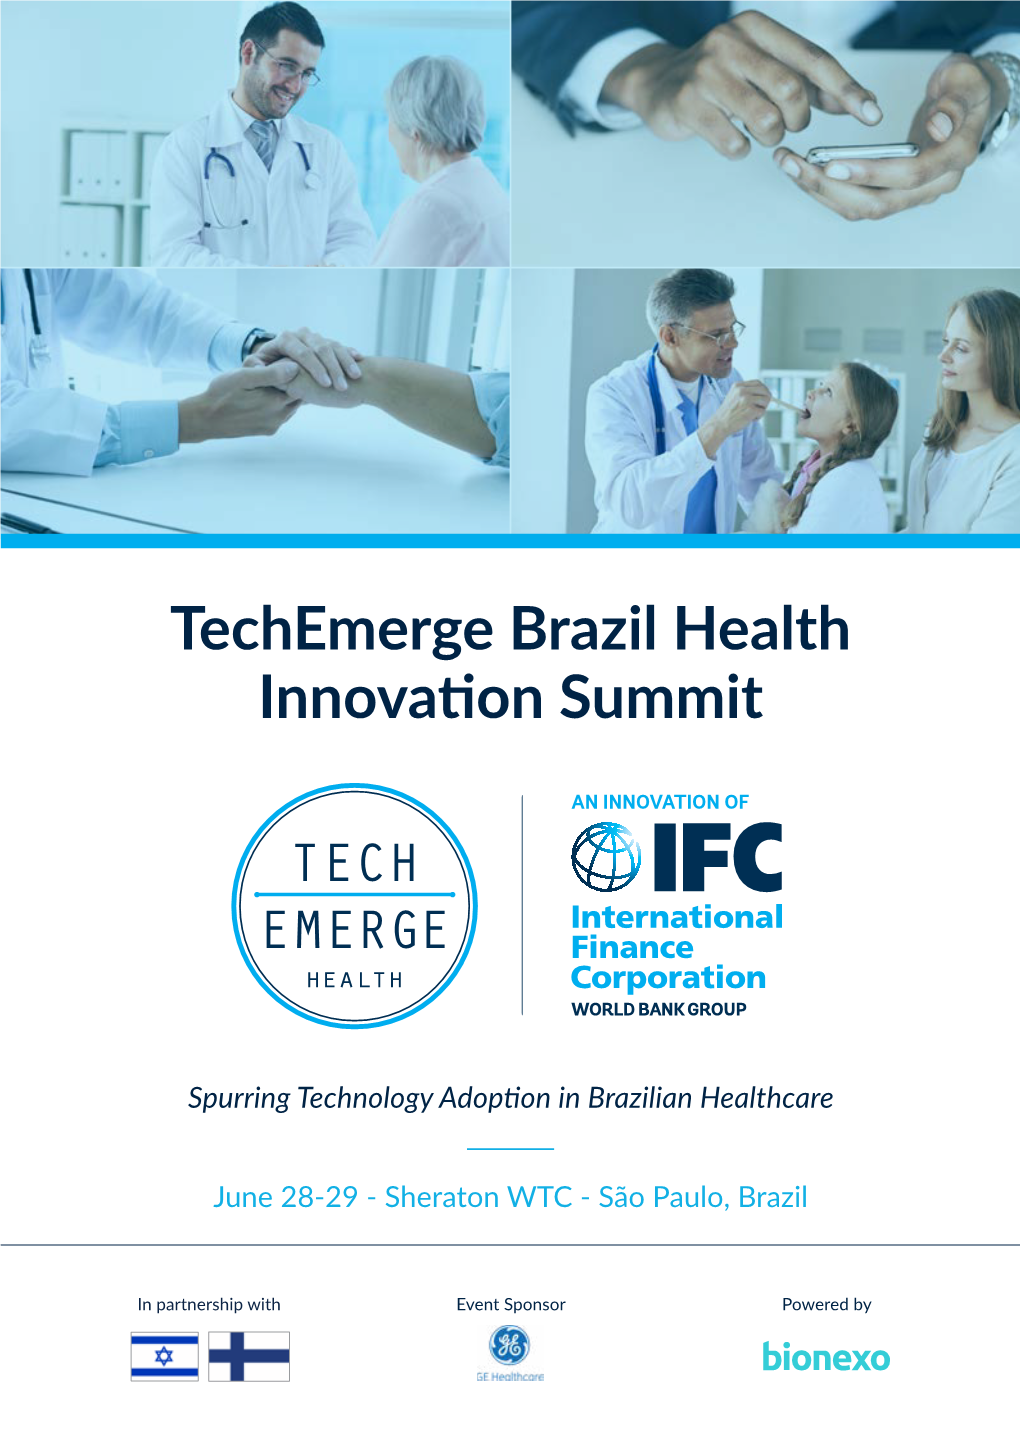 Techemerge Brazil Health Innovation Summit